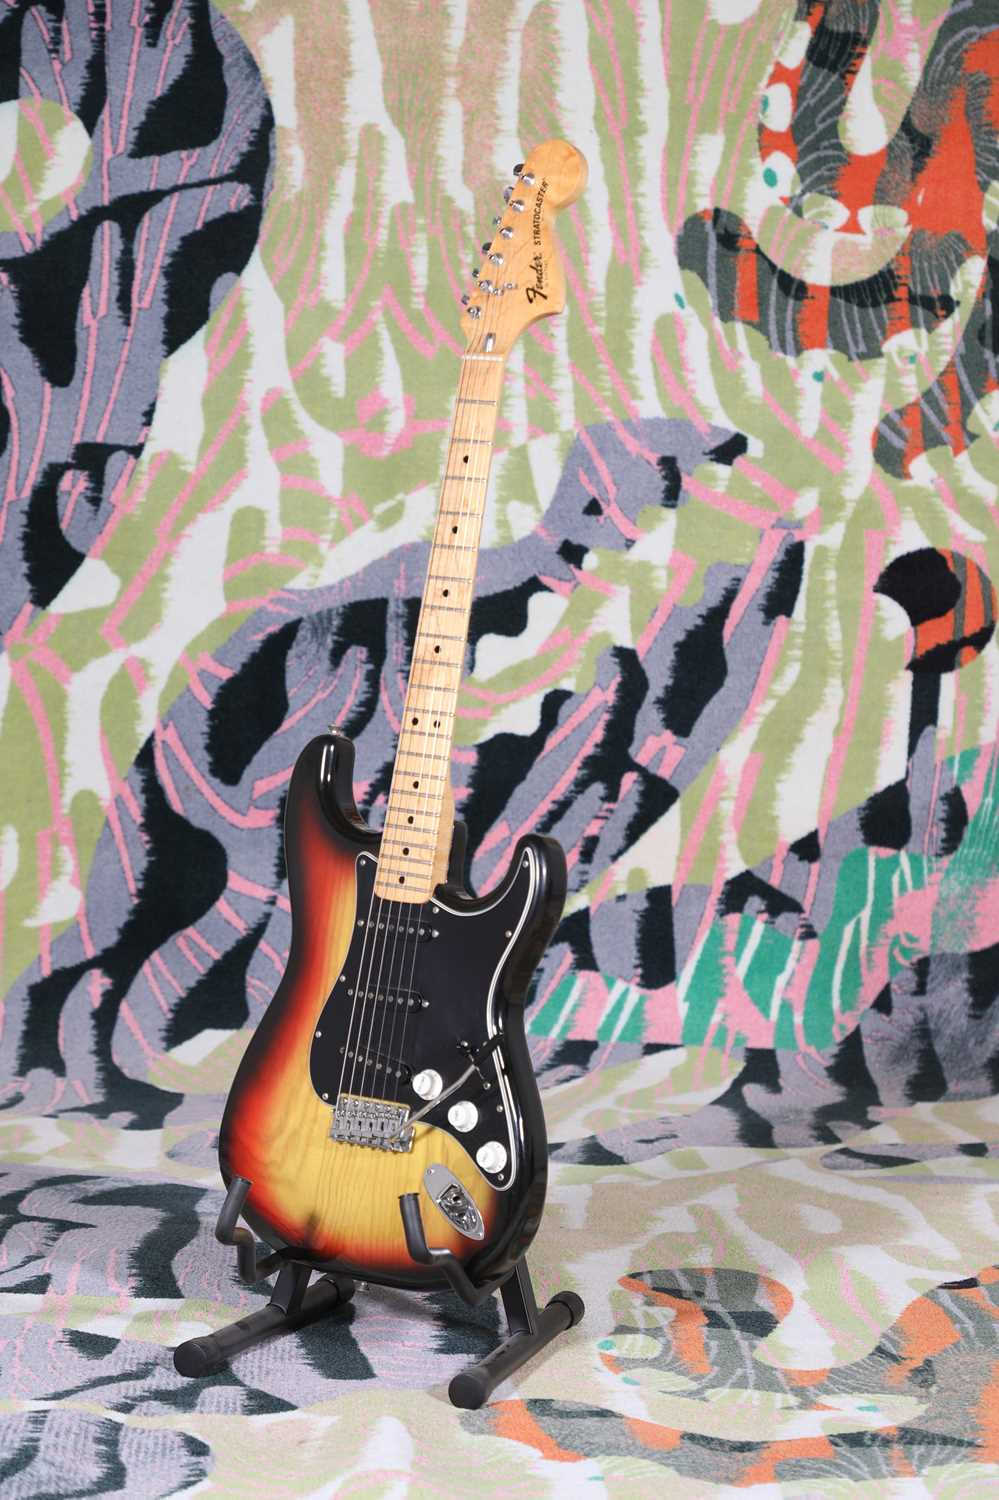 A 1977 Fender Stratocaster electric guitar,